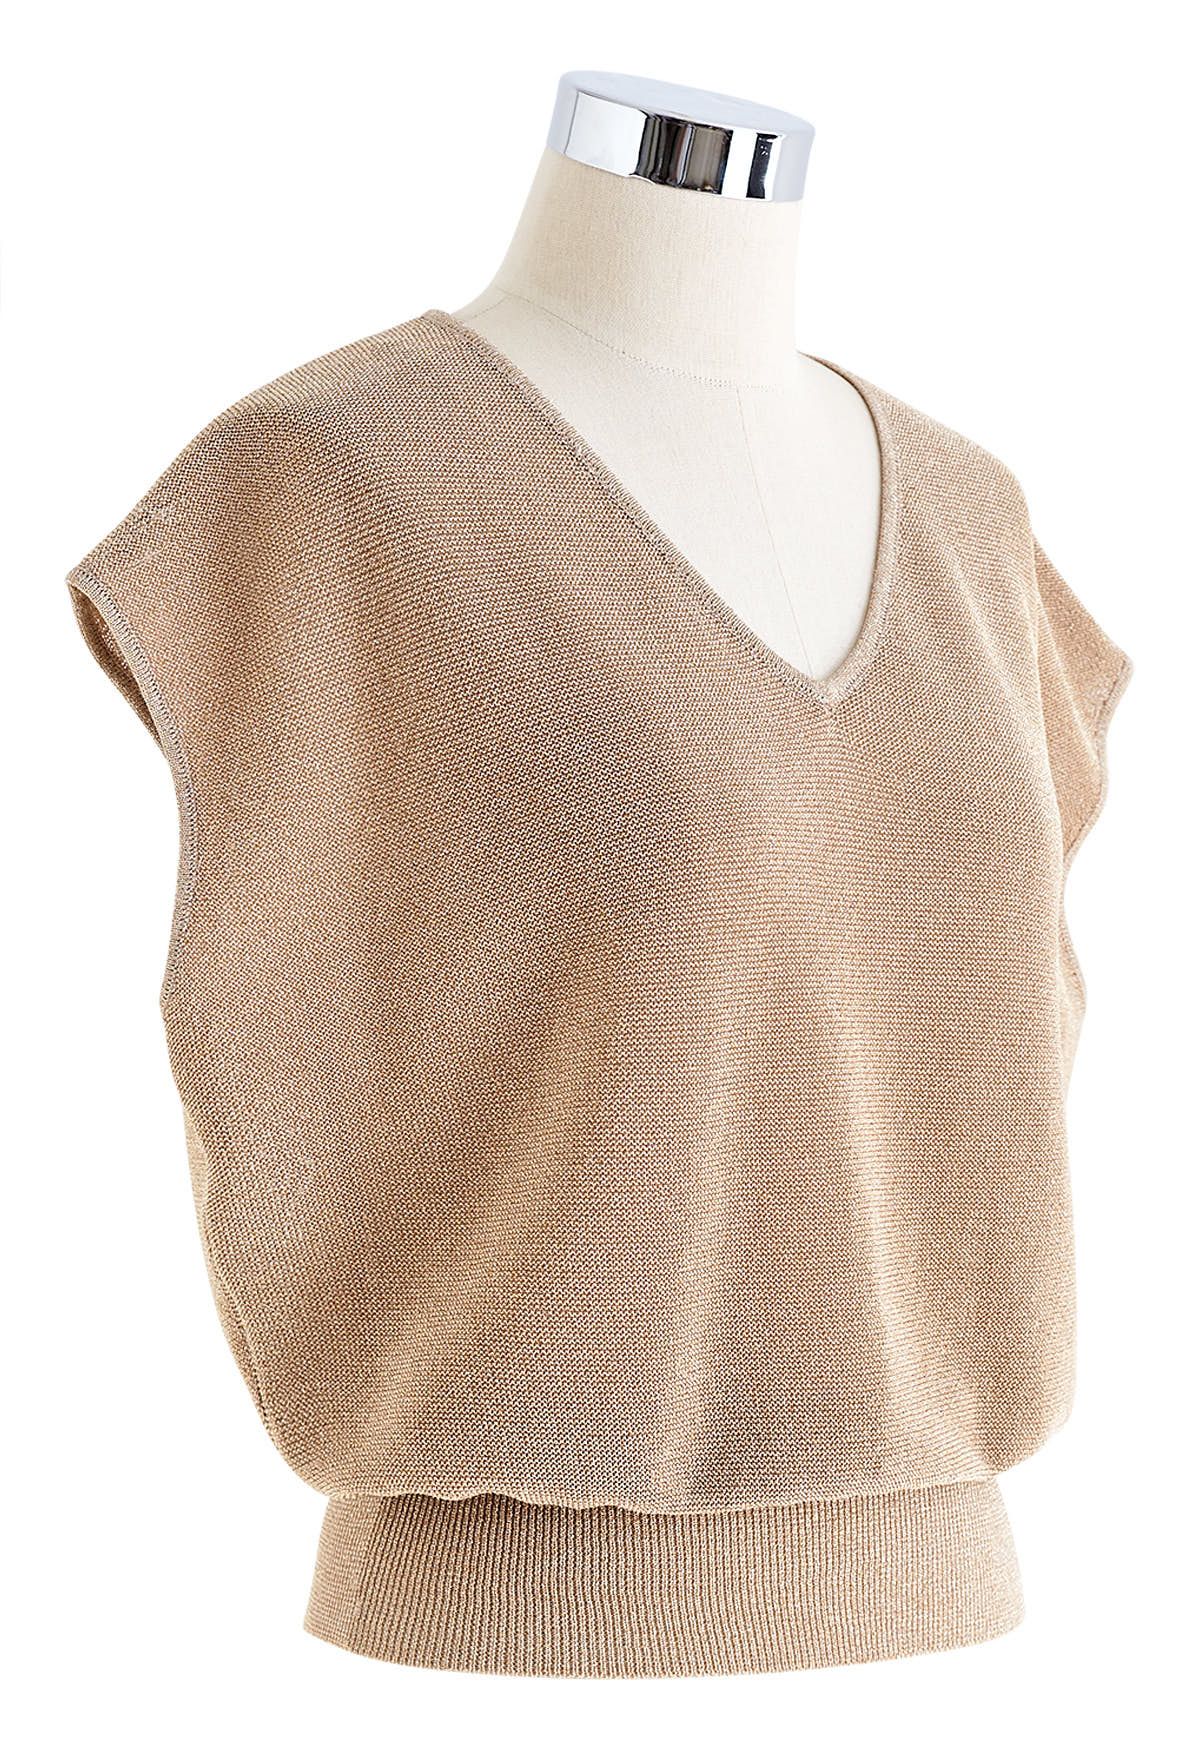 Glimmer Knit V-Neck Sleeveless Top in Light Tan